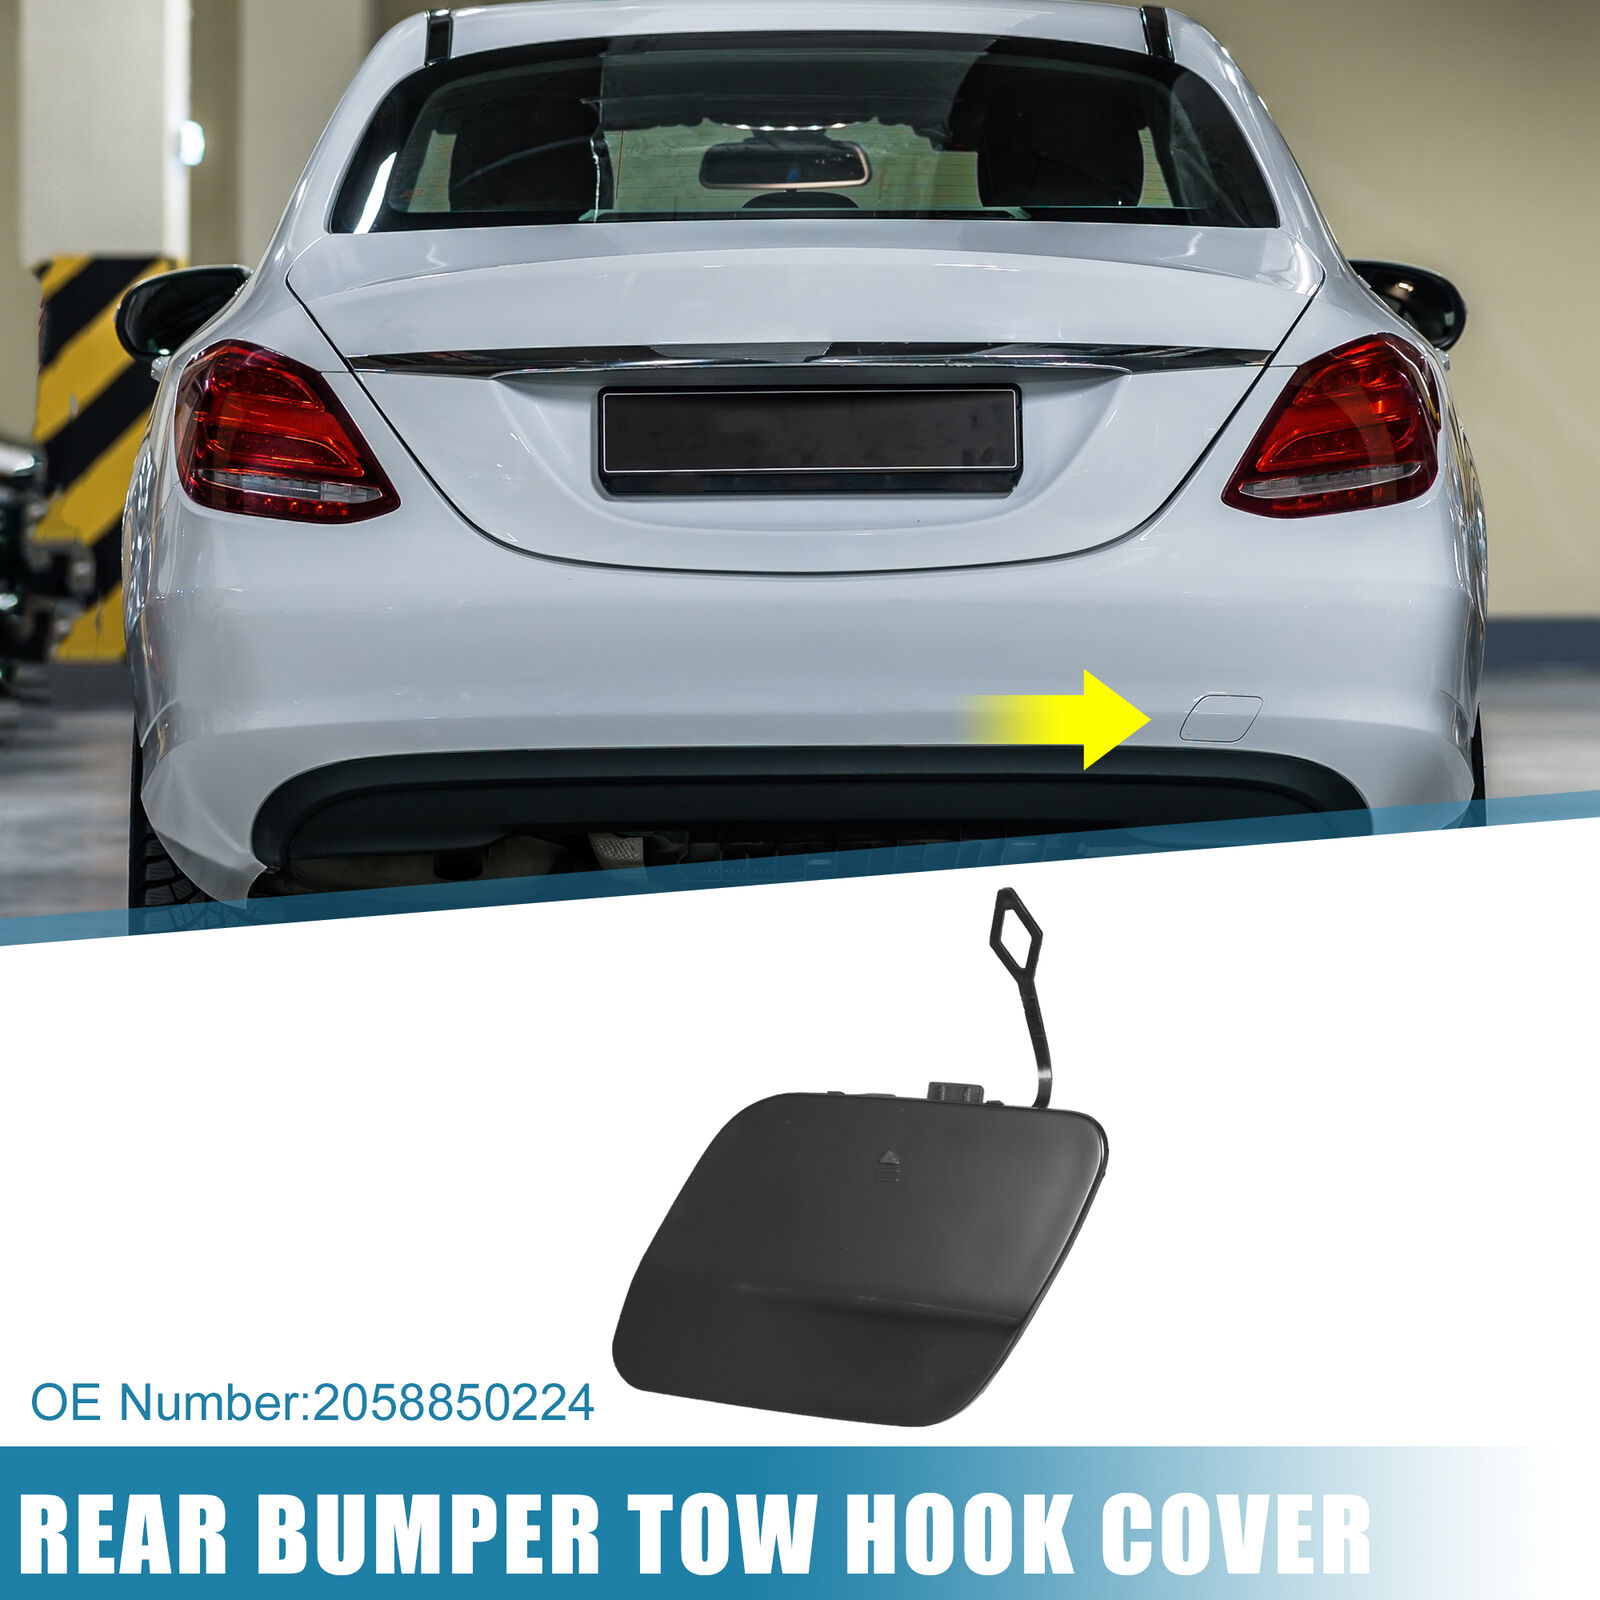 Rear Bumper Tow Hook Cover 2058850224 for Mercedes-Benz C300 C400 2015 Black